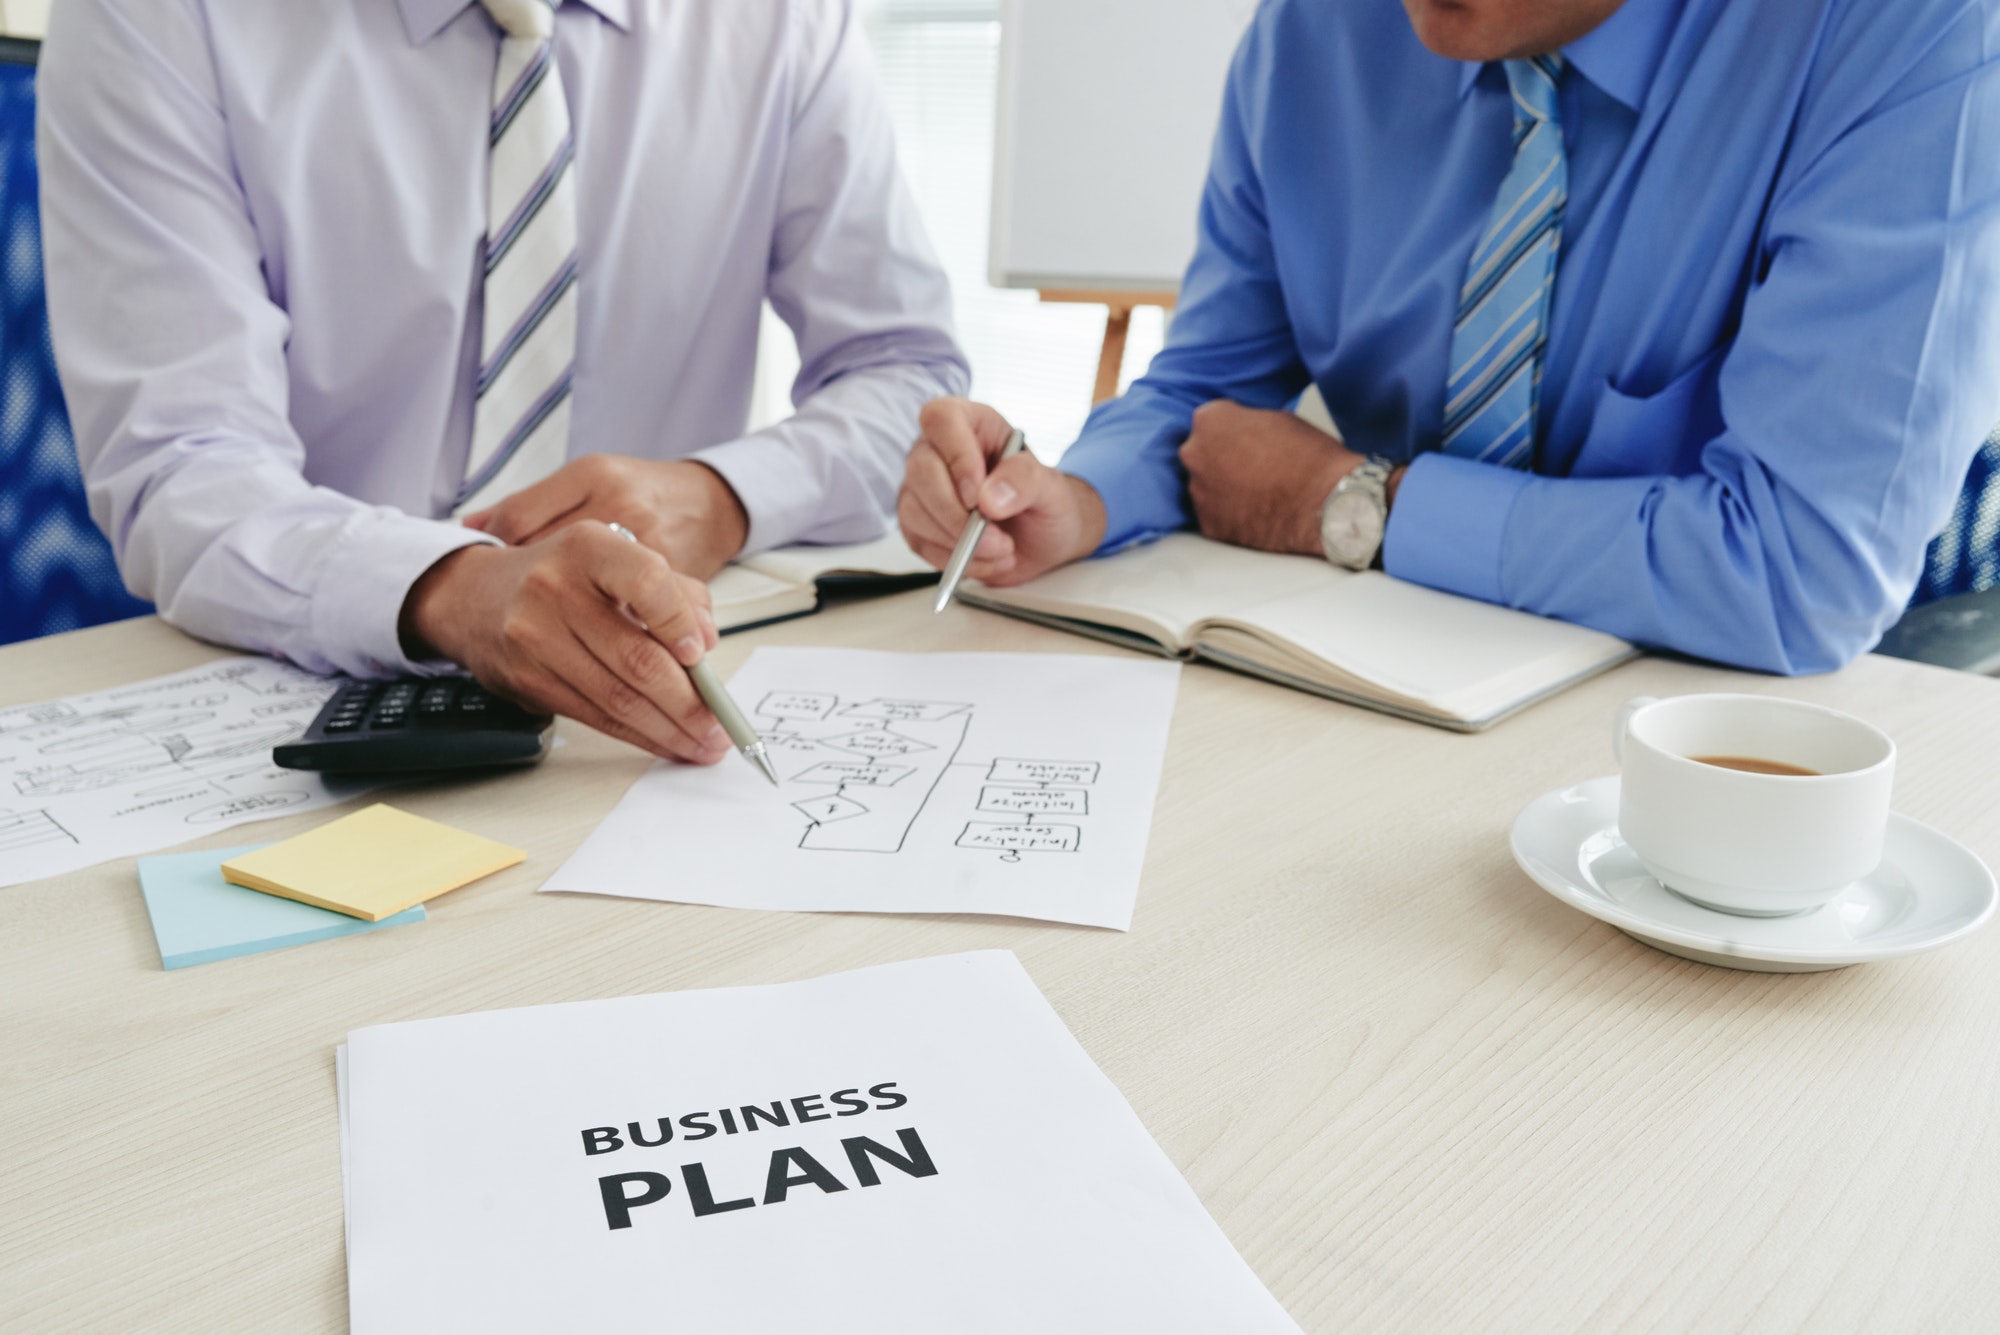 Creating business plan